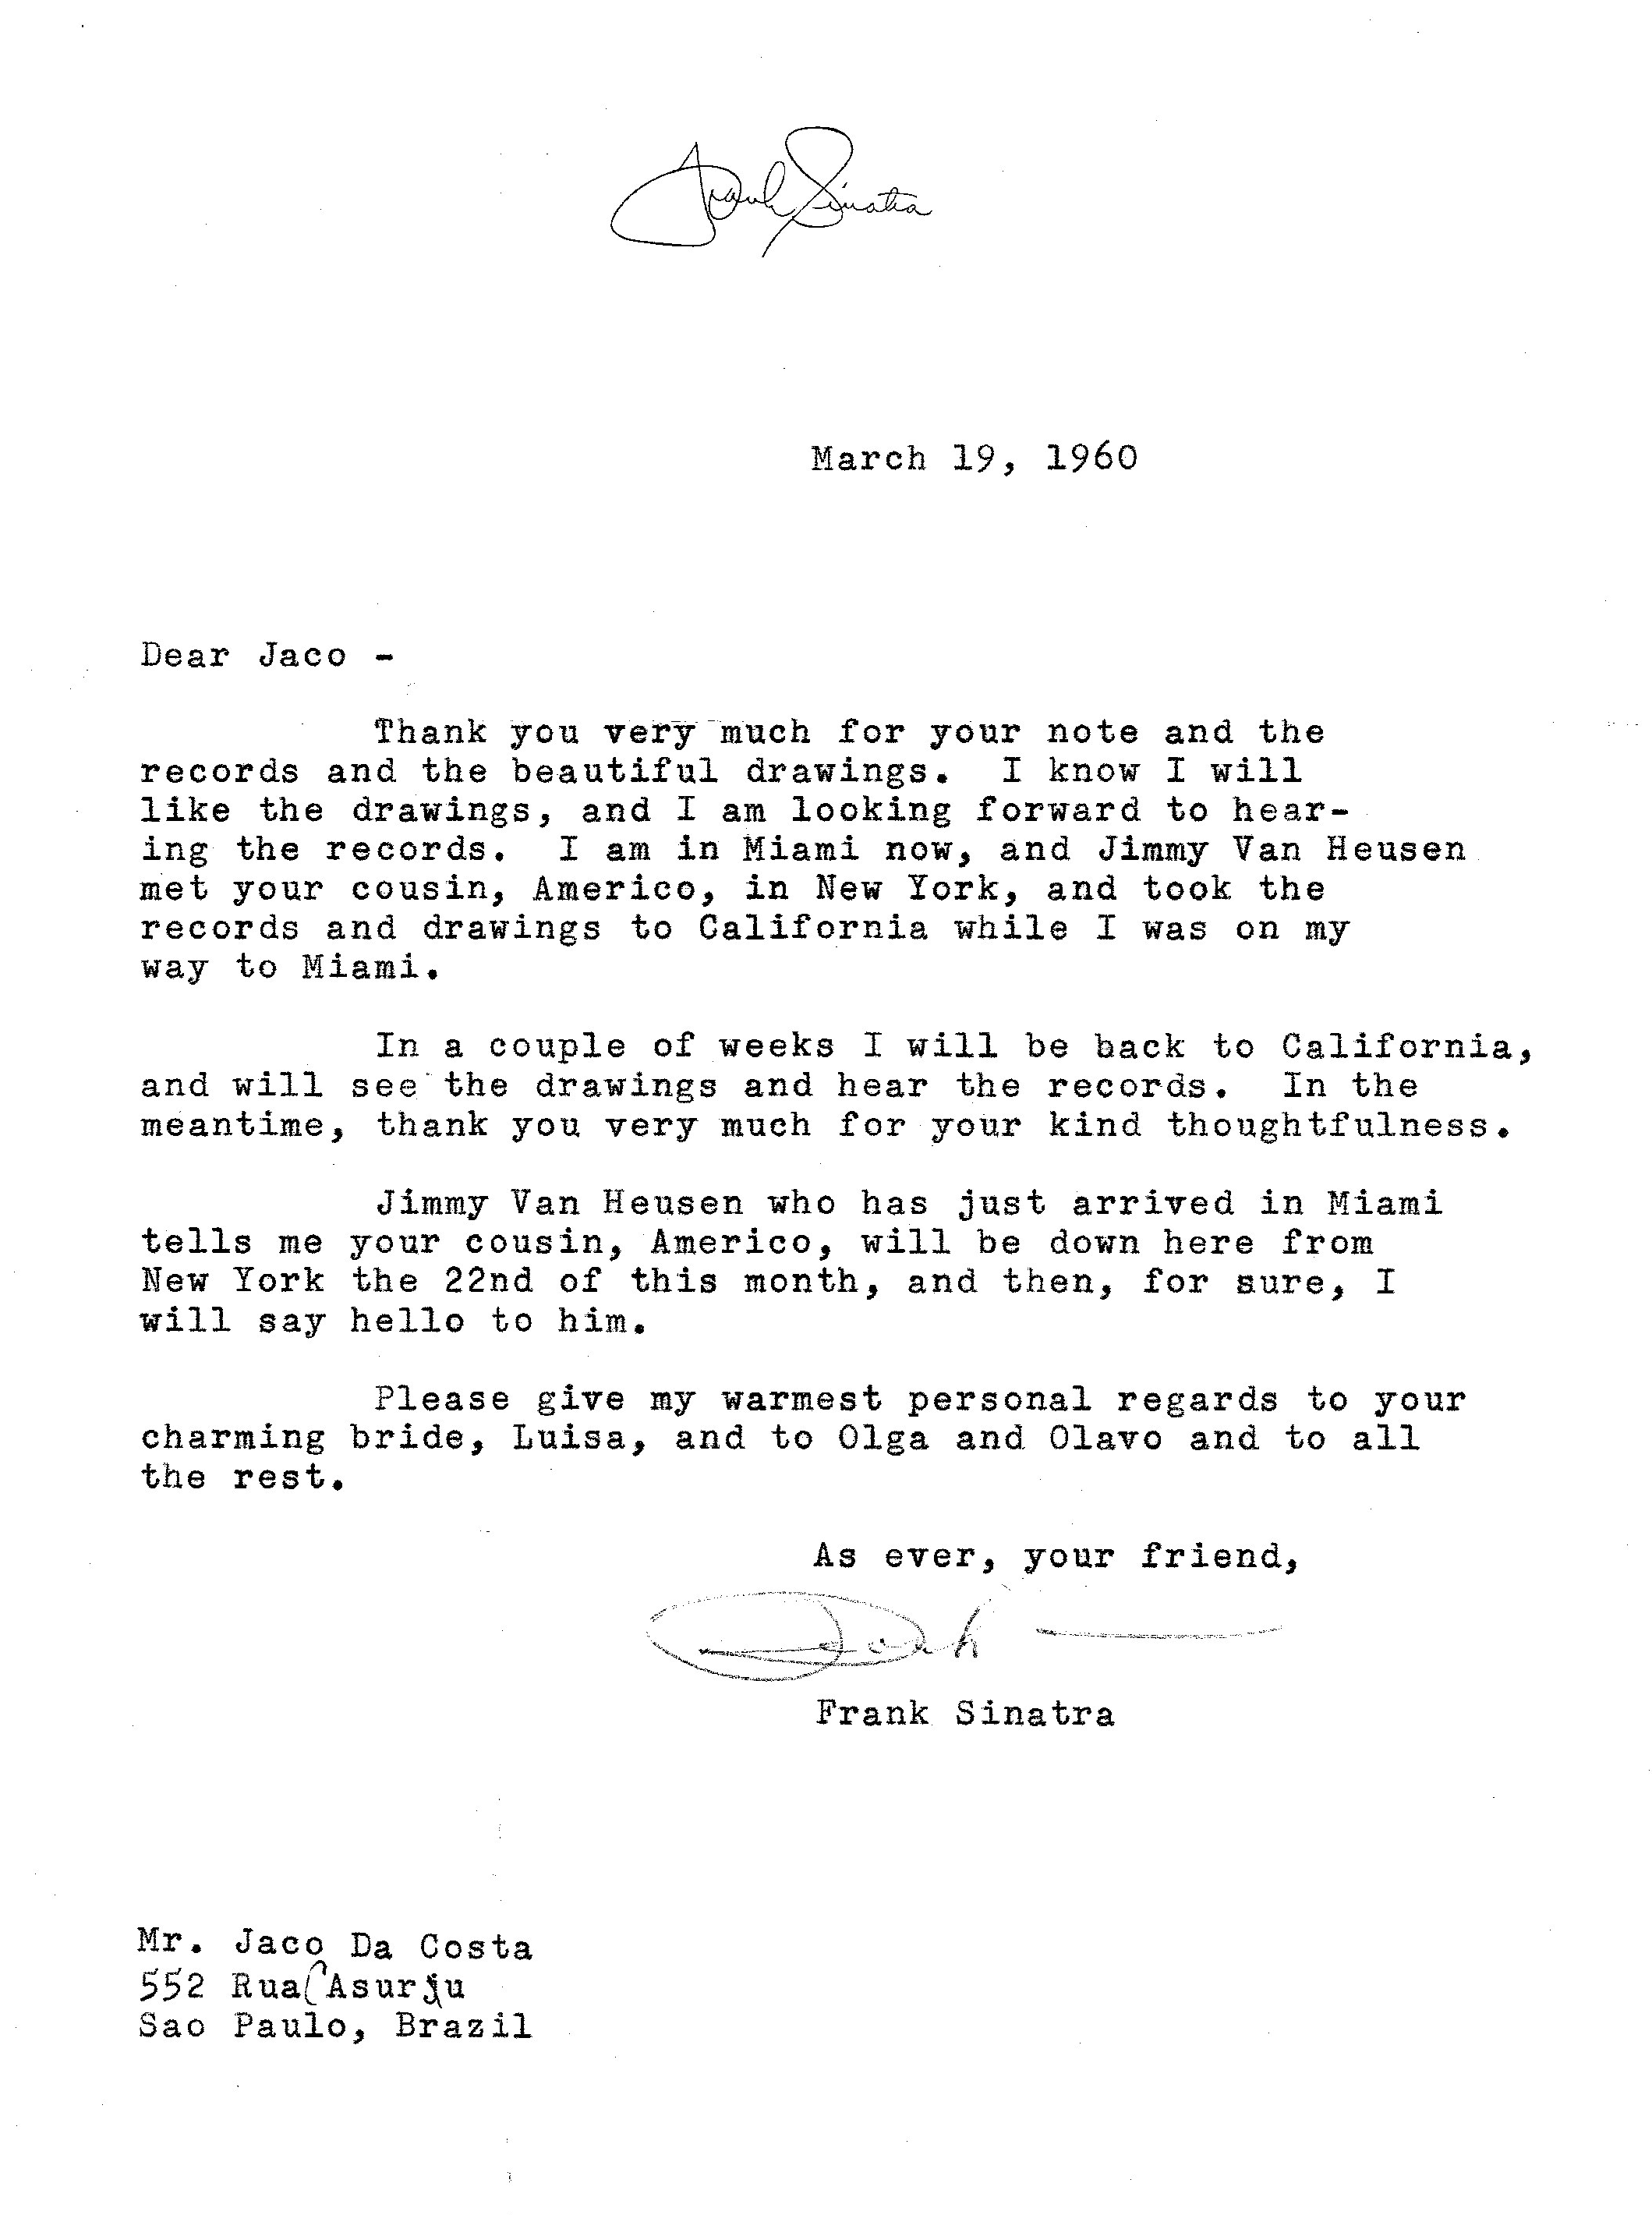 Carta do Frank